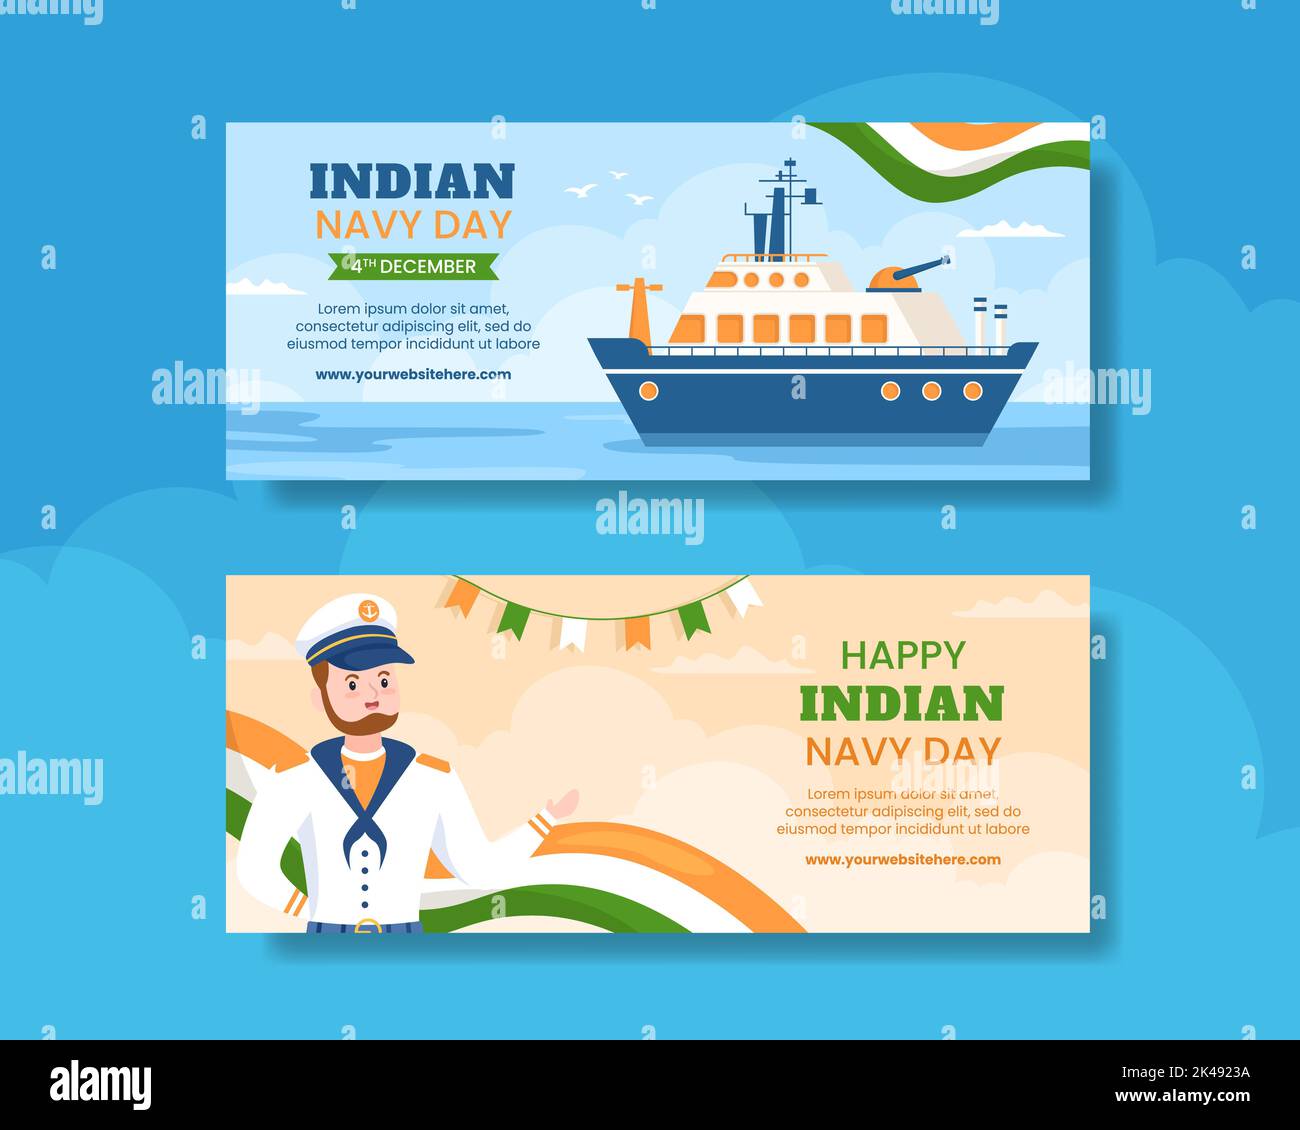 Best Indian Navy Day Flag Illustration download in PNG & Vector format